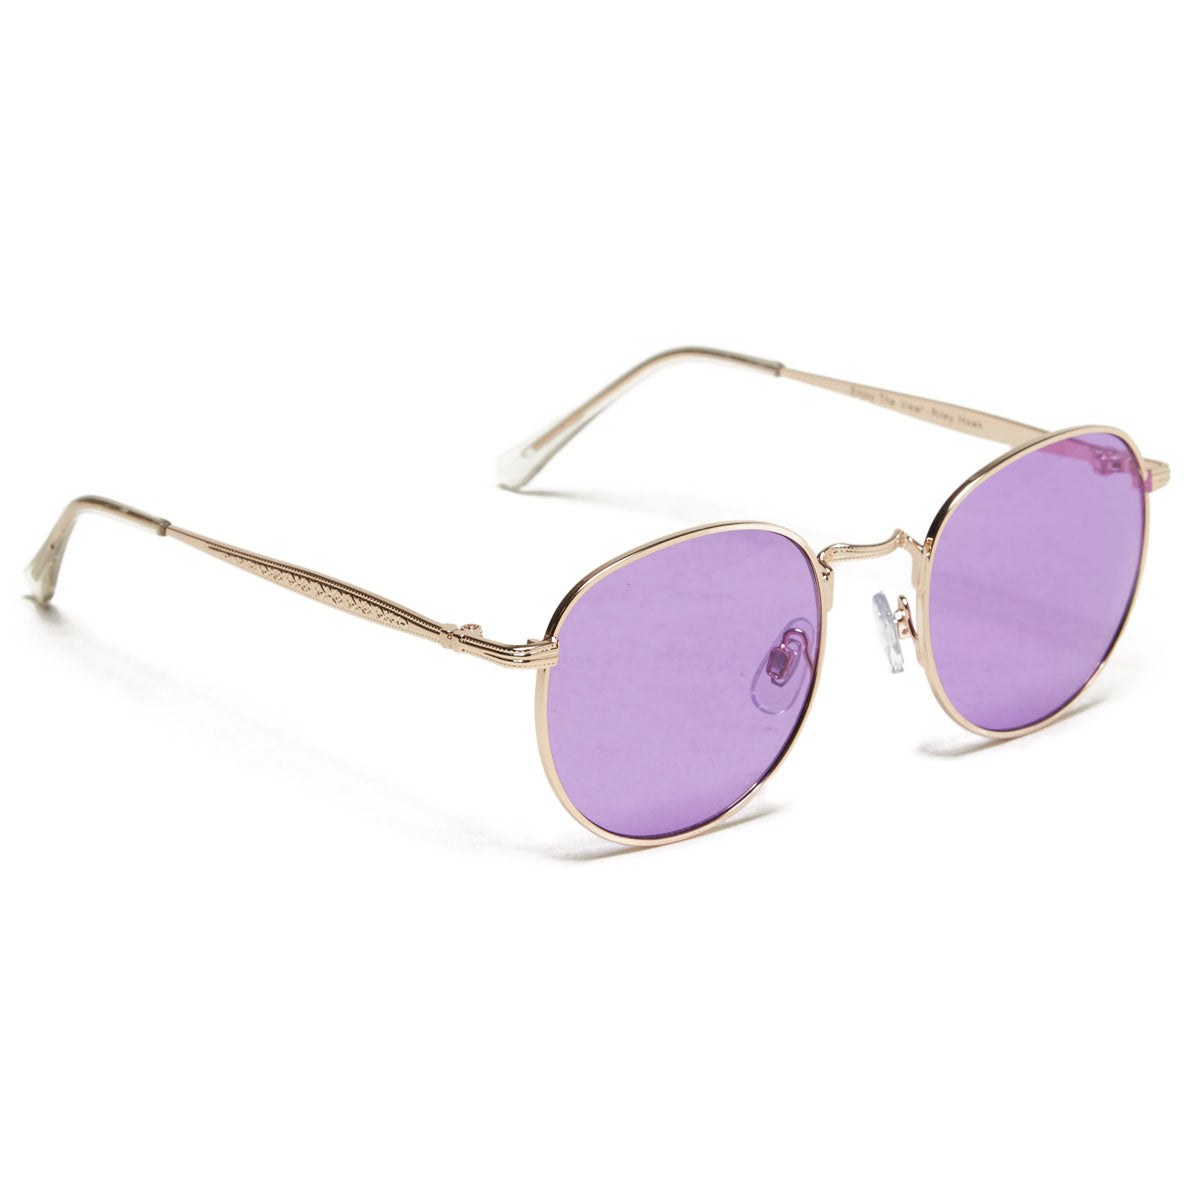 Happy Hour Holidaze Sunglasses - Gold/Purple image 1